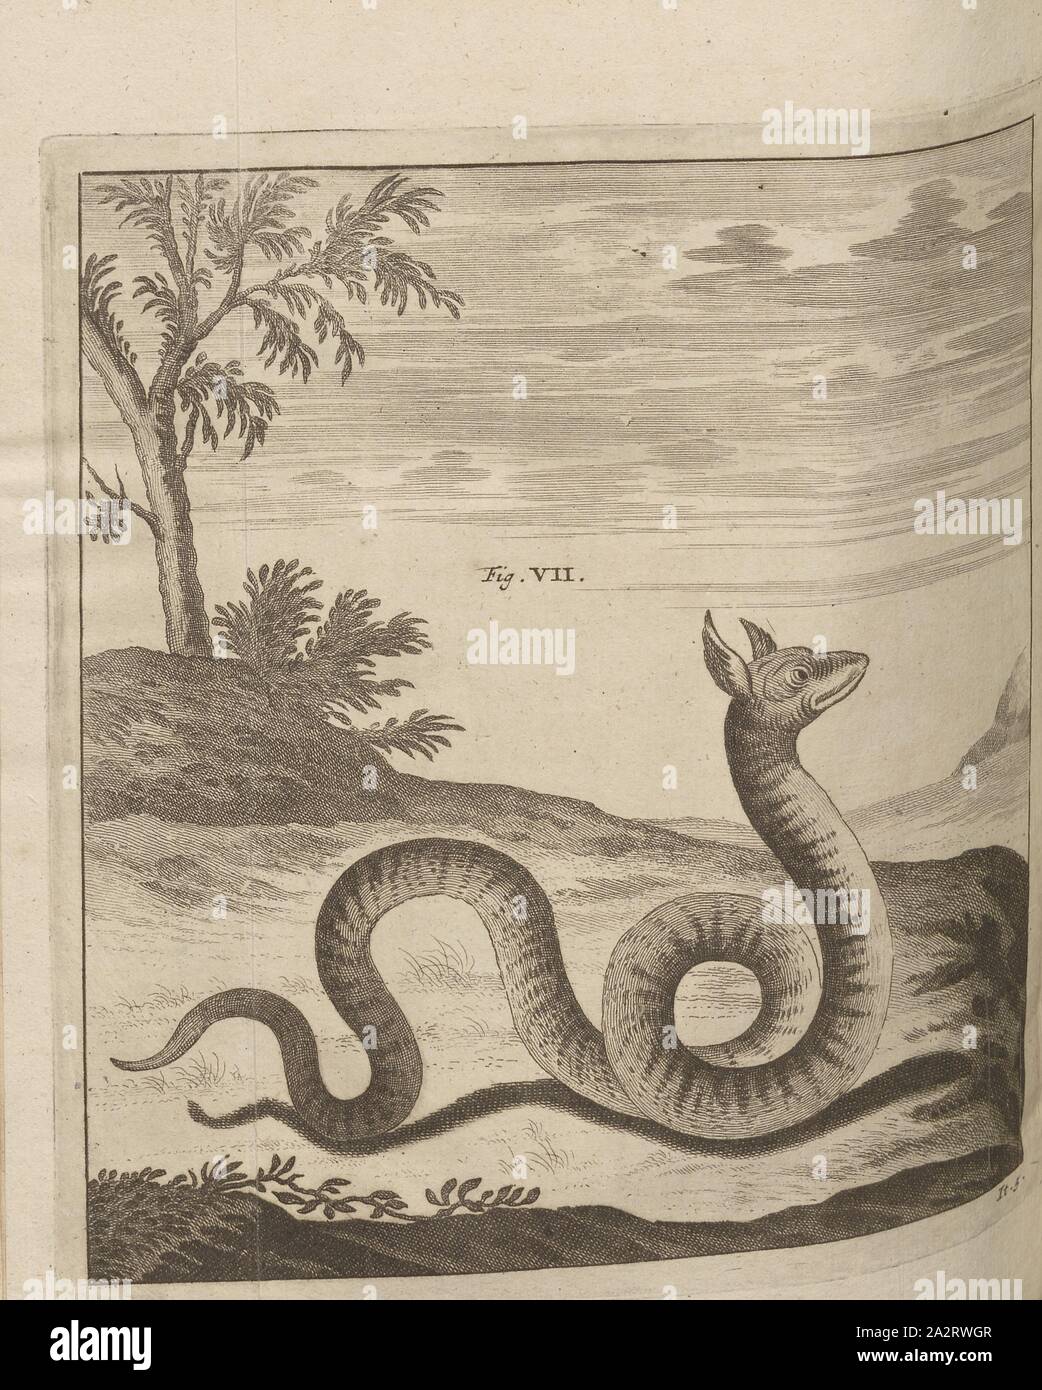 Dragon 7, Dragon with Serpent Body, FIg., 7, after p. 388, 1723, Johann Jakob Scheuchzer: Ouresiphoites Helveticus, sive, itinera per Helvetiae alpinas regiones facta annis MDCCII, MDCIII, MDCCIV, MDCCV, MDCCVI, MDCCVII, MDCCIX, MDCCX, MDCCXI (...). Lugduni Batavorum [Leiden]: typis ac sumptibus Petri van der Aa, MDCCXXIII [1723 Stock Photo